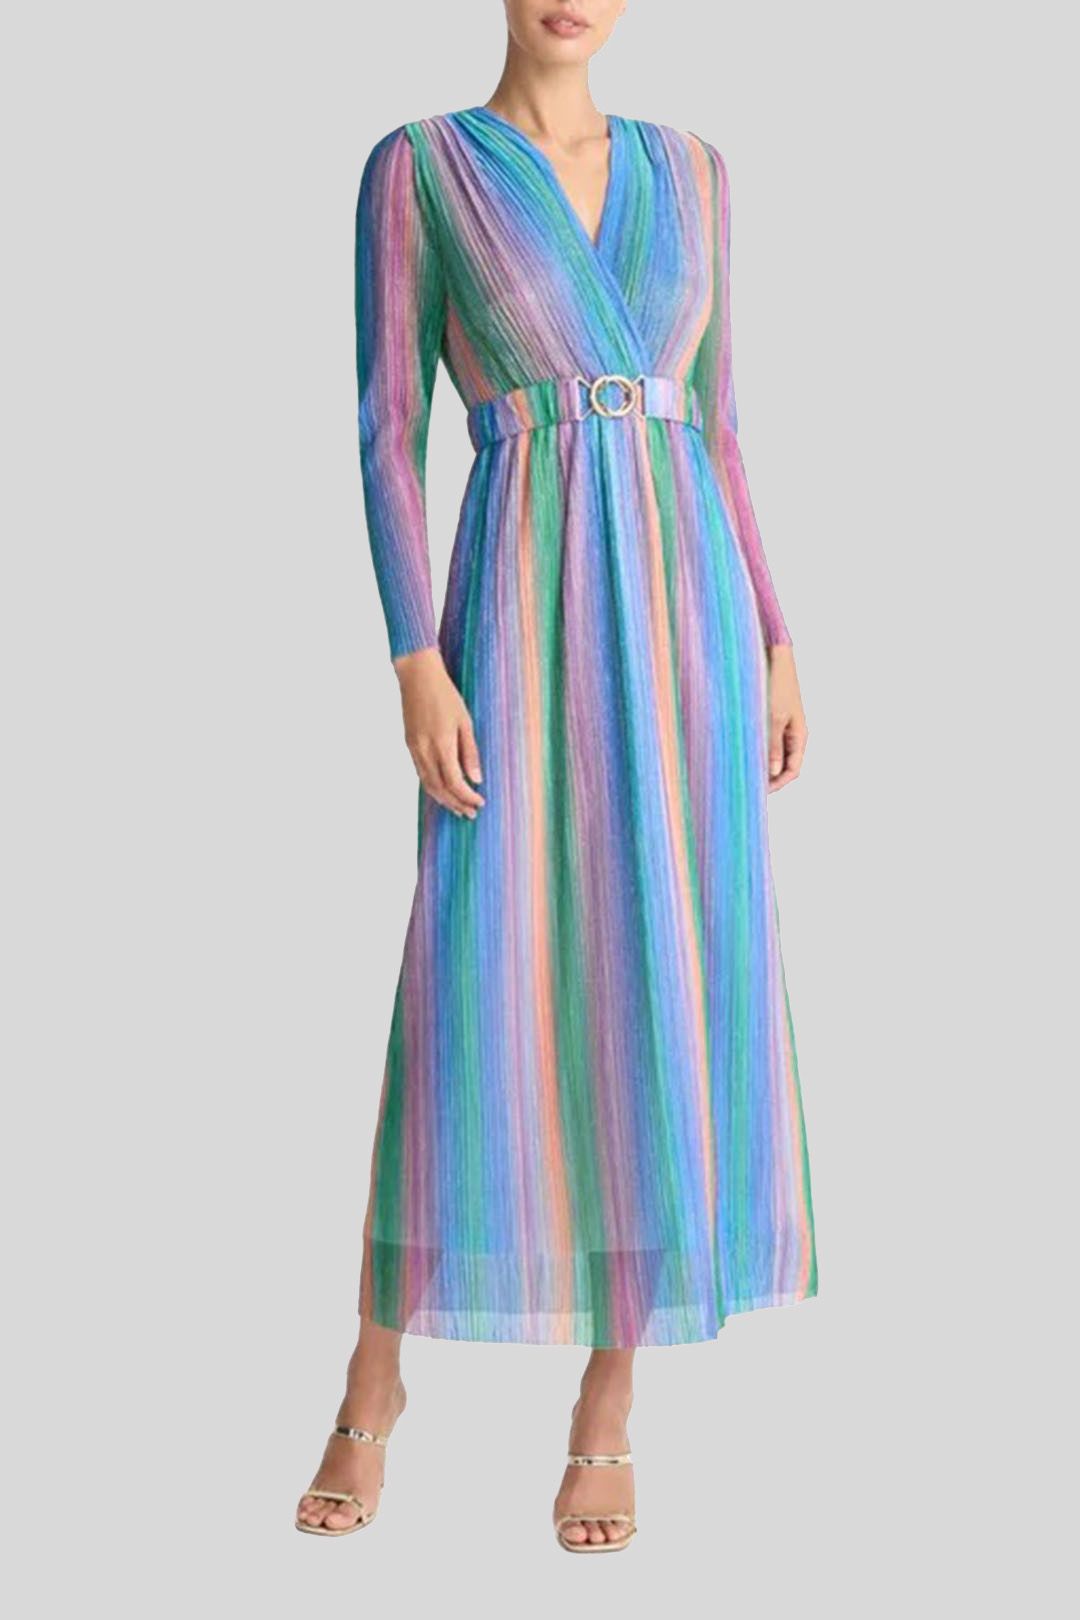 Sheike Summer Stripes Metallic Multi Dress